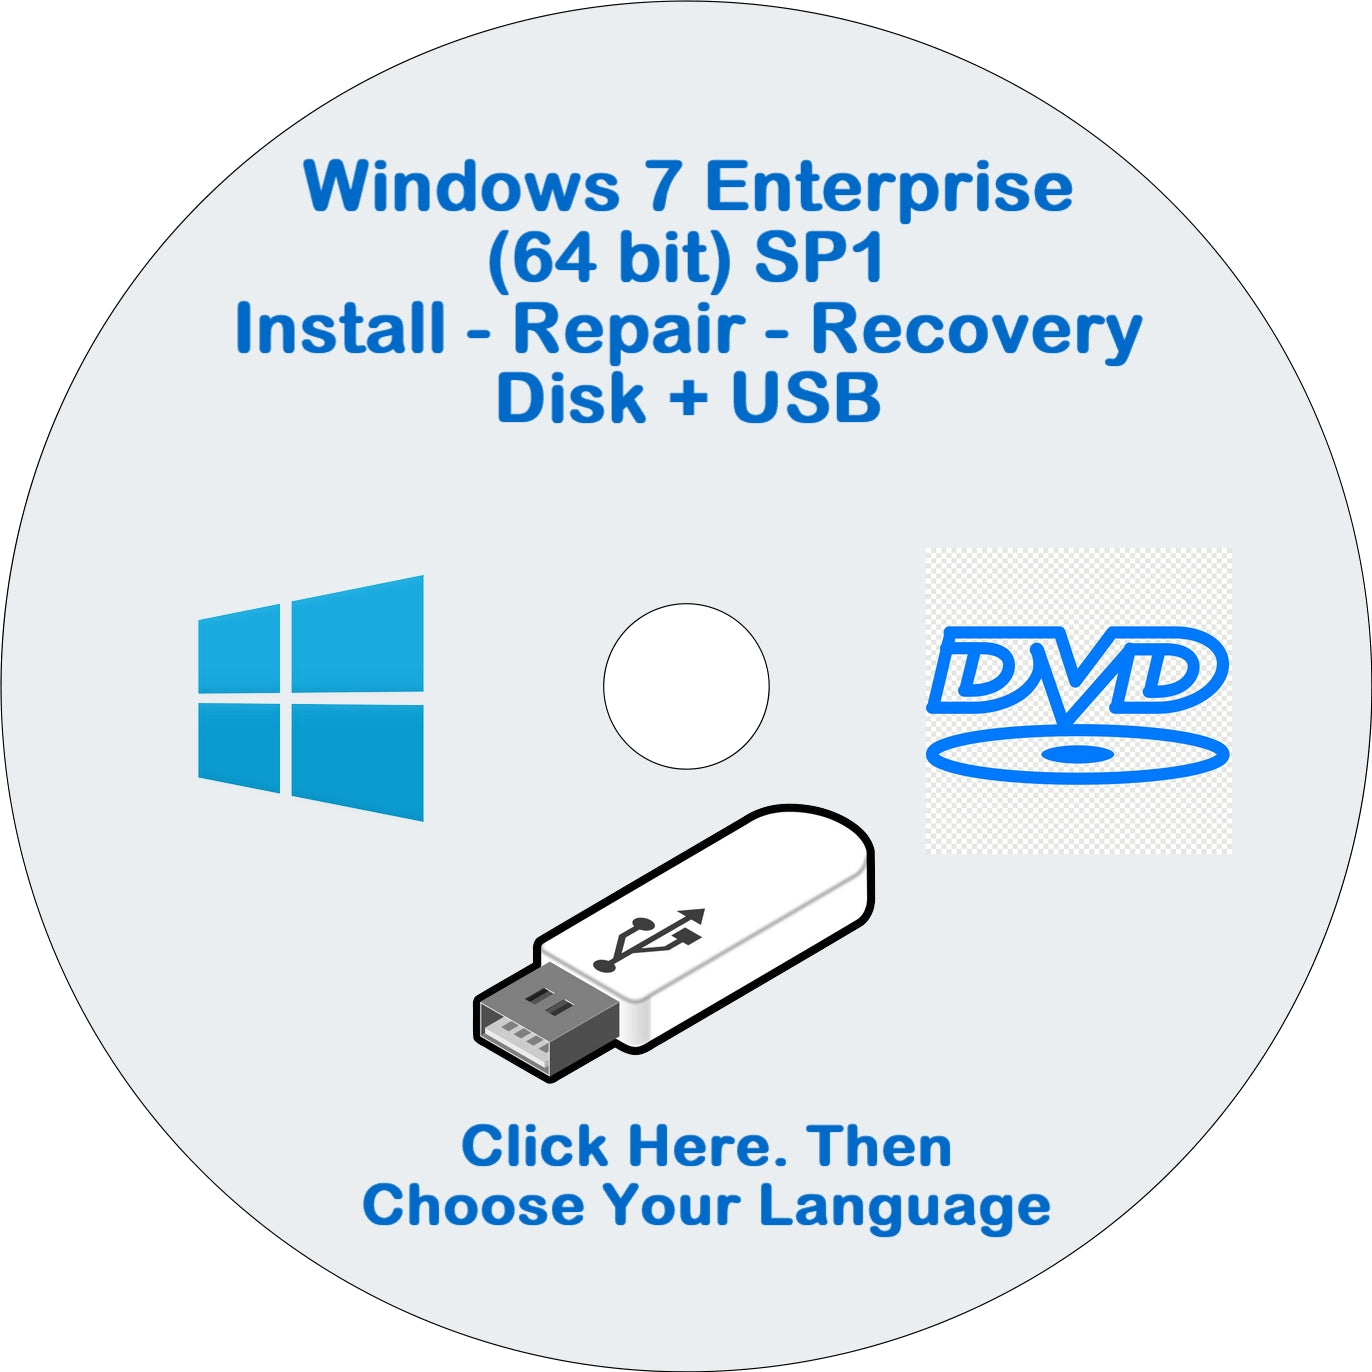 Windows 7 Enterprise Disk + USB 64 Bit